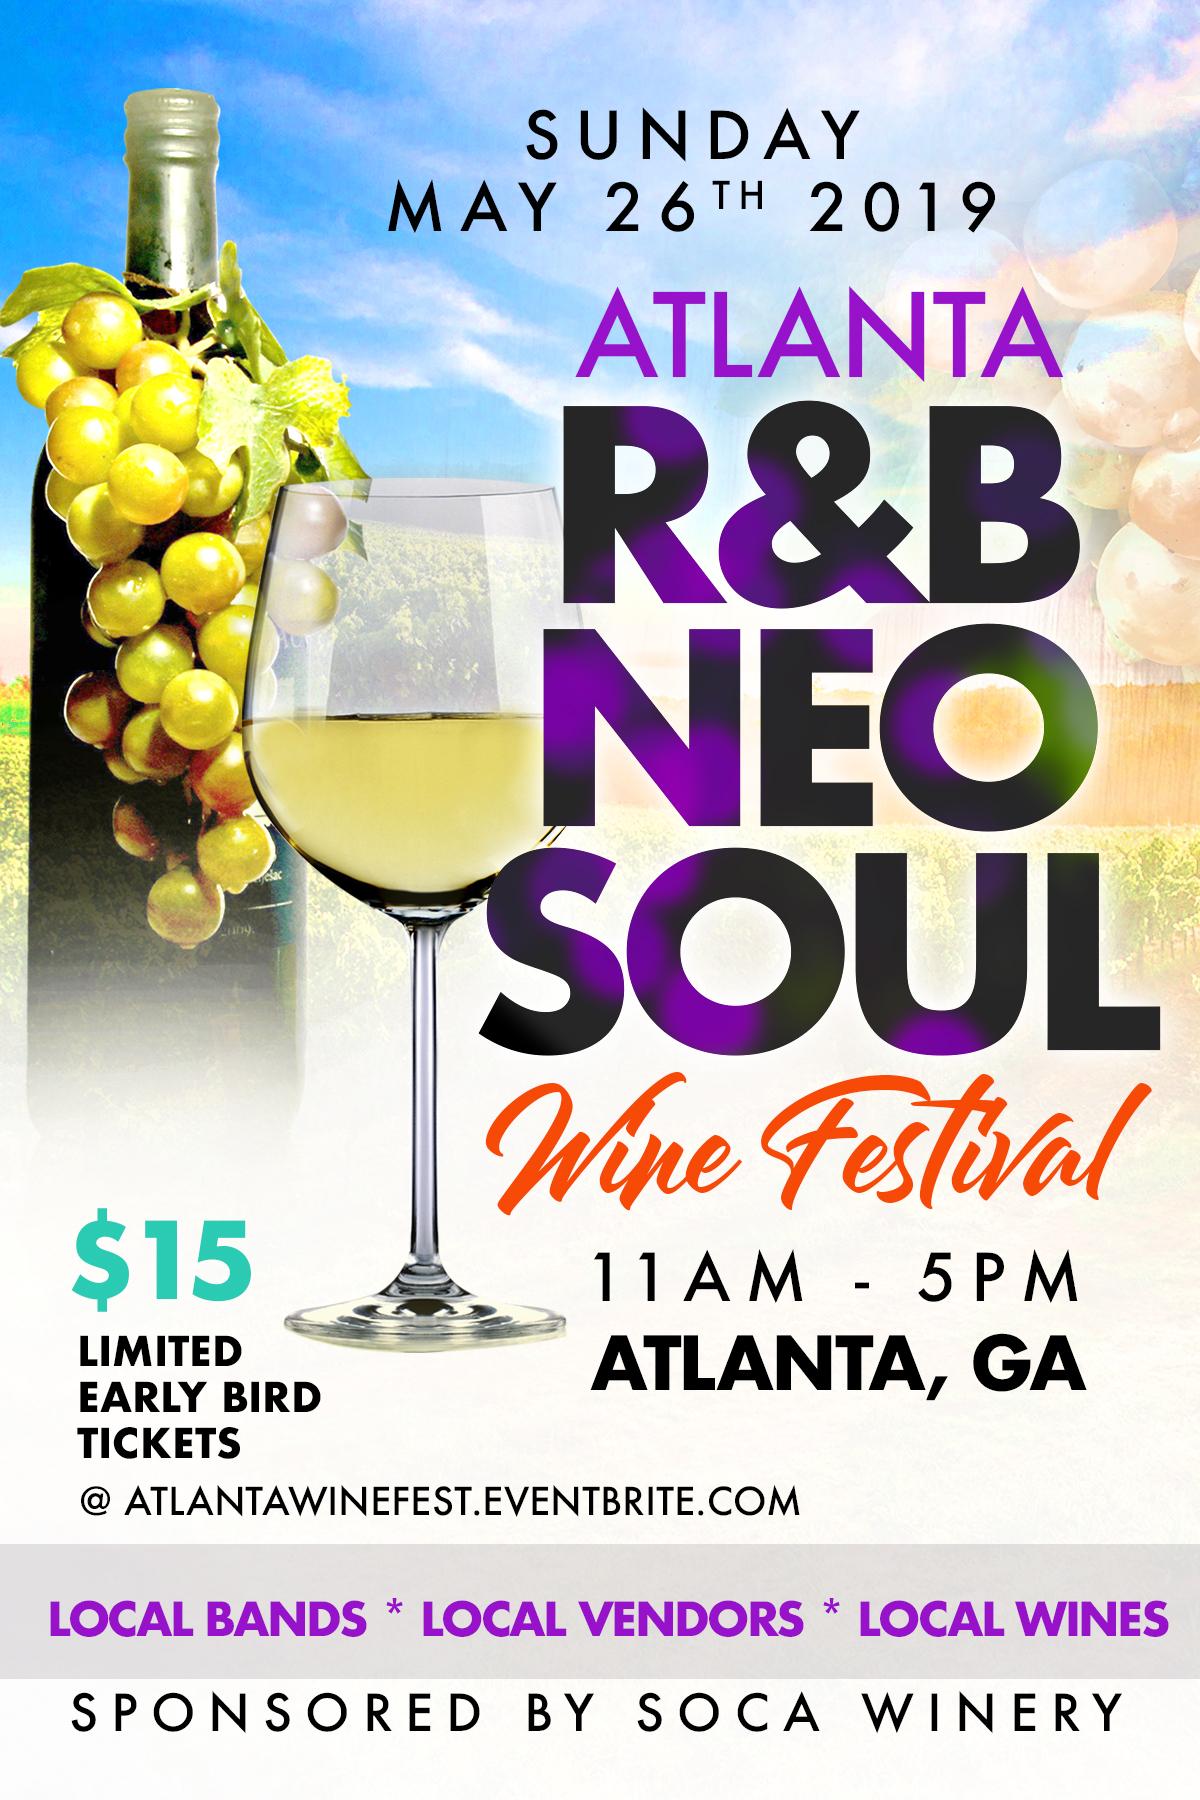 Atlanta R&B Neo Soul Wine Festival Date, Time, Info, Schedule, Lineup